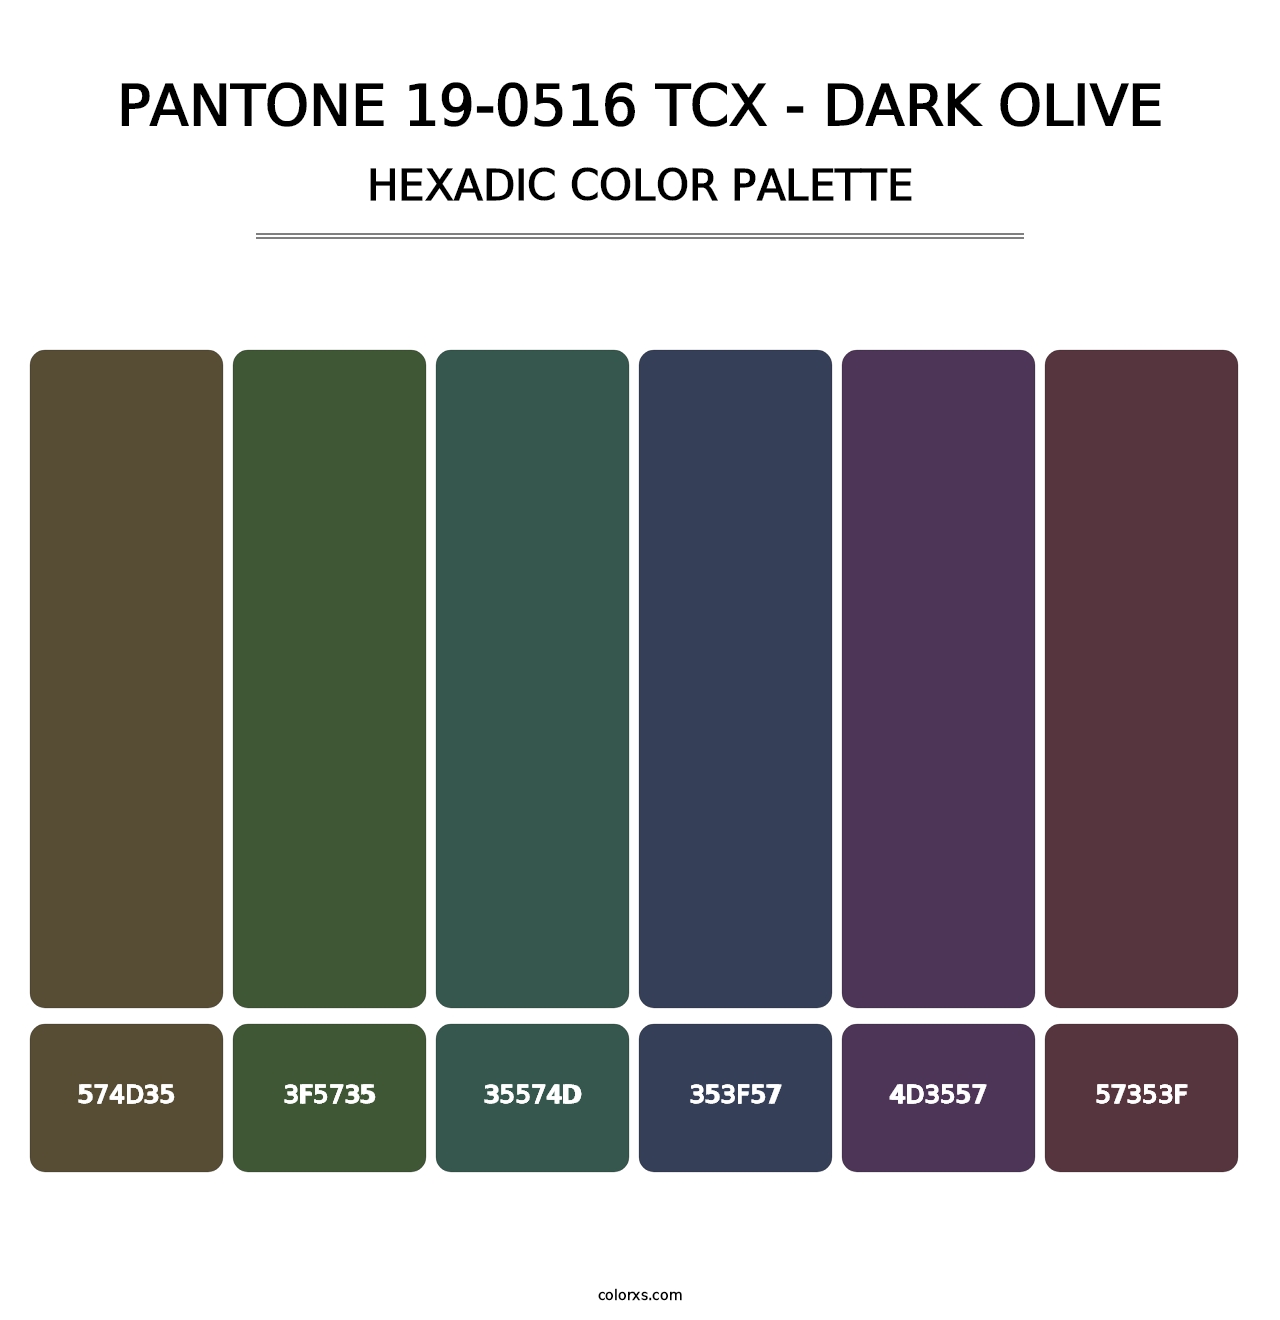 PANTONE 19-0516 TCX - Dark Olive - Hexadic Color Palette